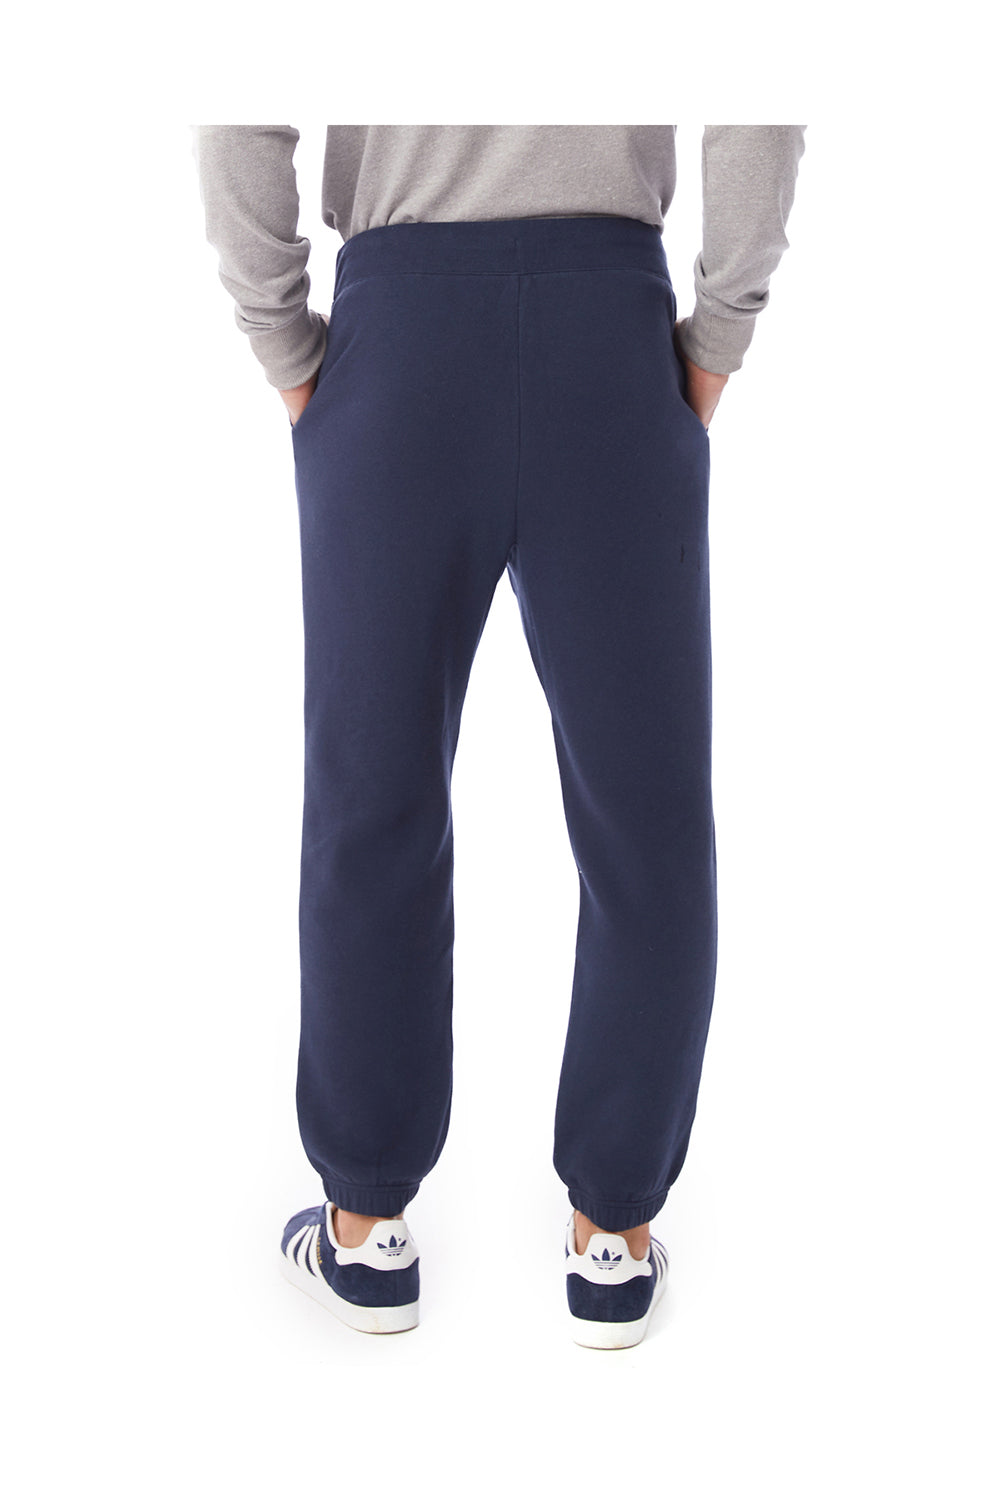 Alternative 8803PF Mens Eco Cozy Fleece Sweatpants w/ Pockets Midnight Navy Blue Model Back